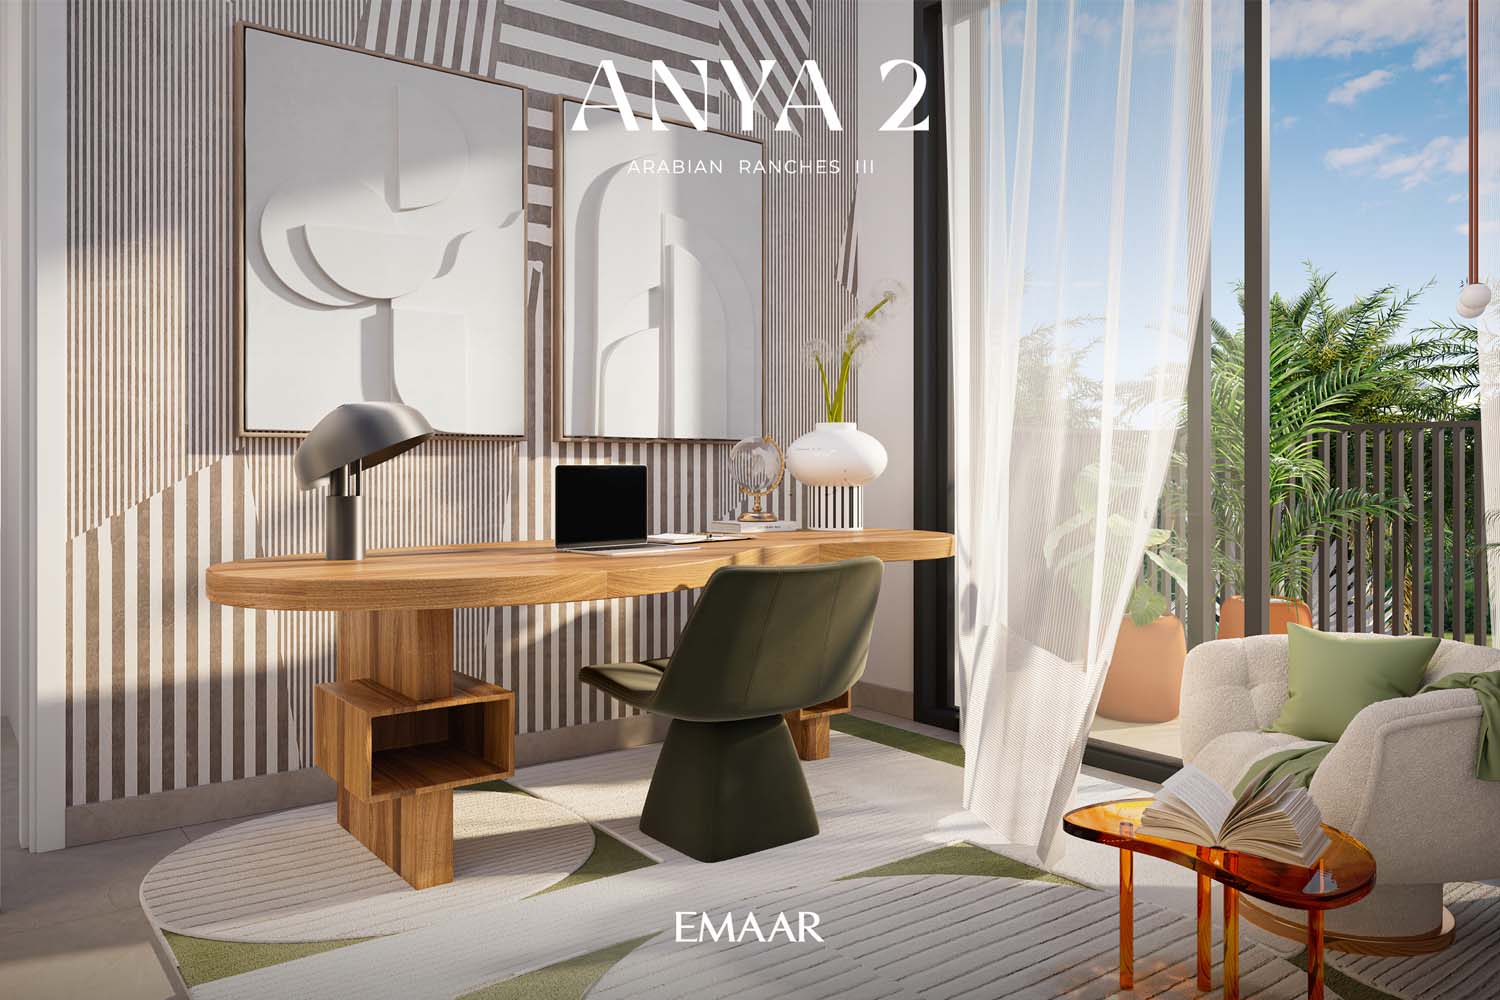 latest-project-in-dubai-anya-2-in-arabian-ranches-iii-for-sale-in-arabian-ranches-3